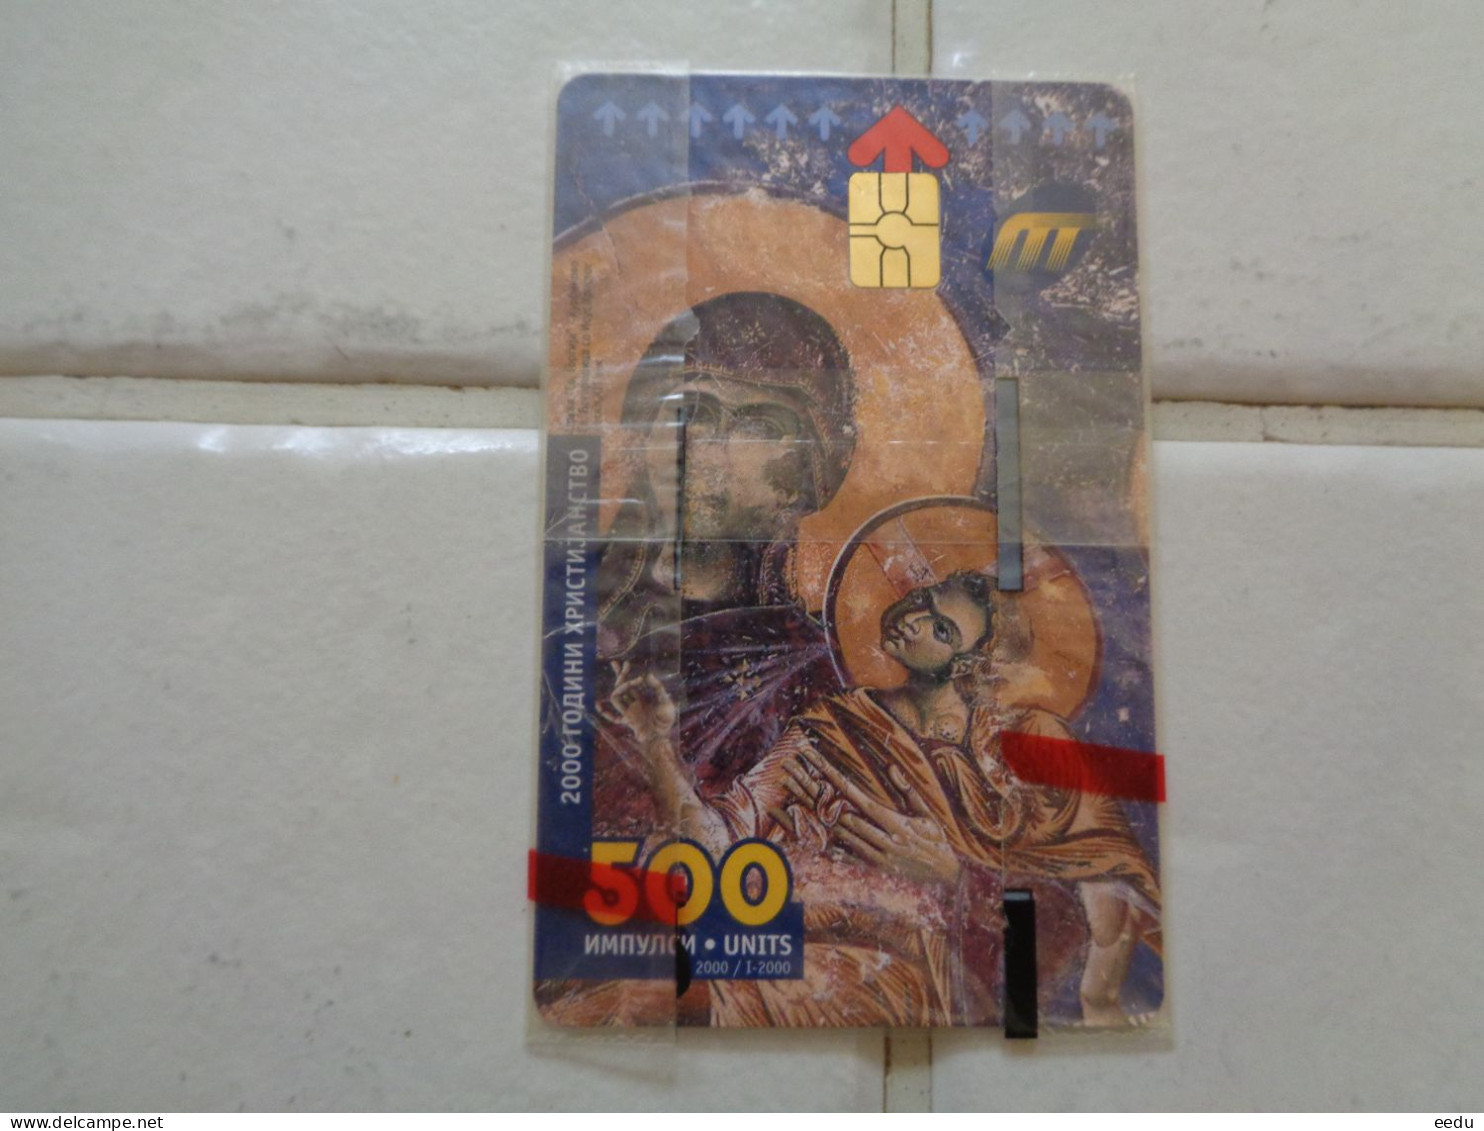 Macedonia Phonecard ( Mint In Blister ) - Macédoine Du Nord